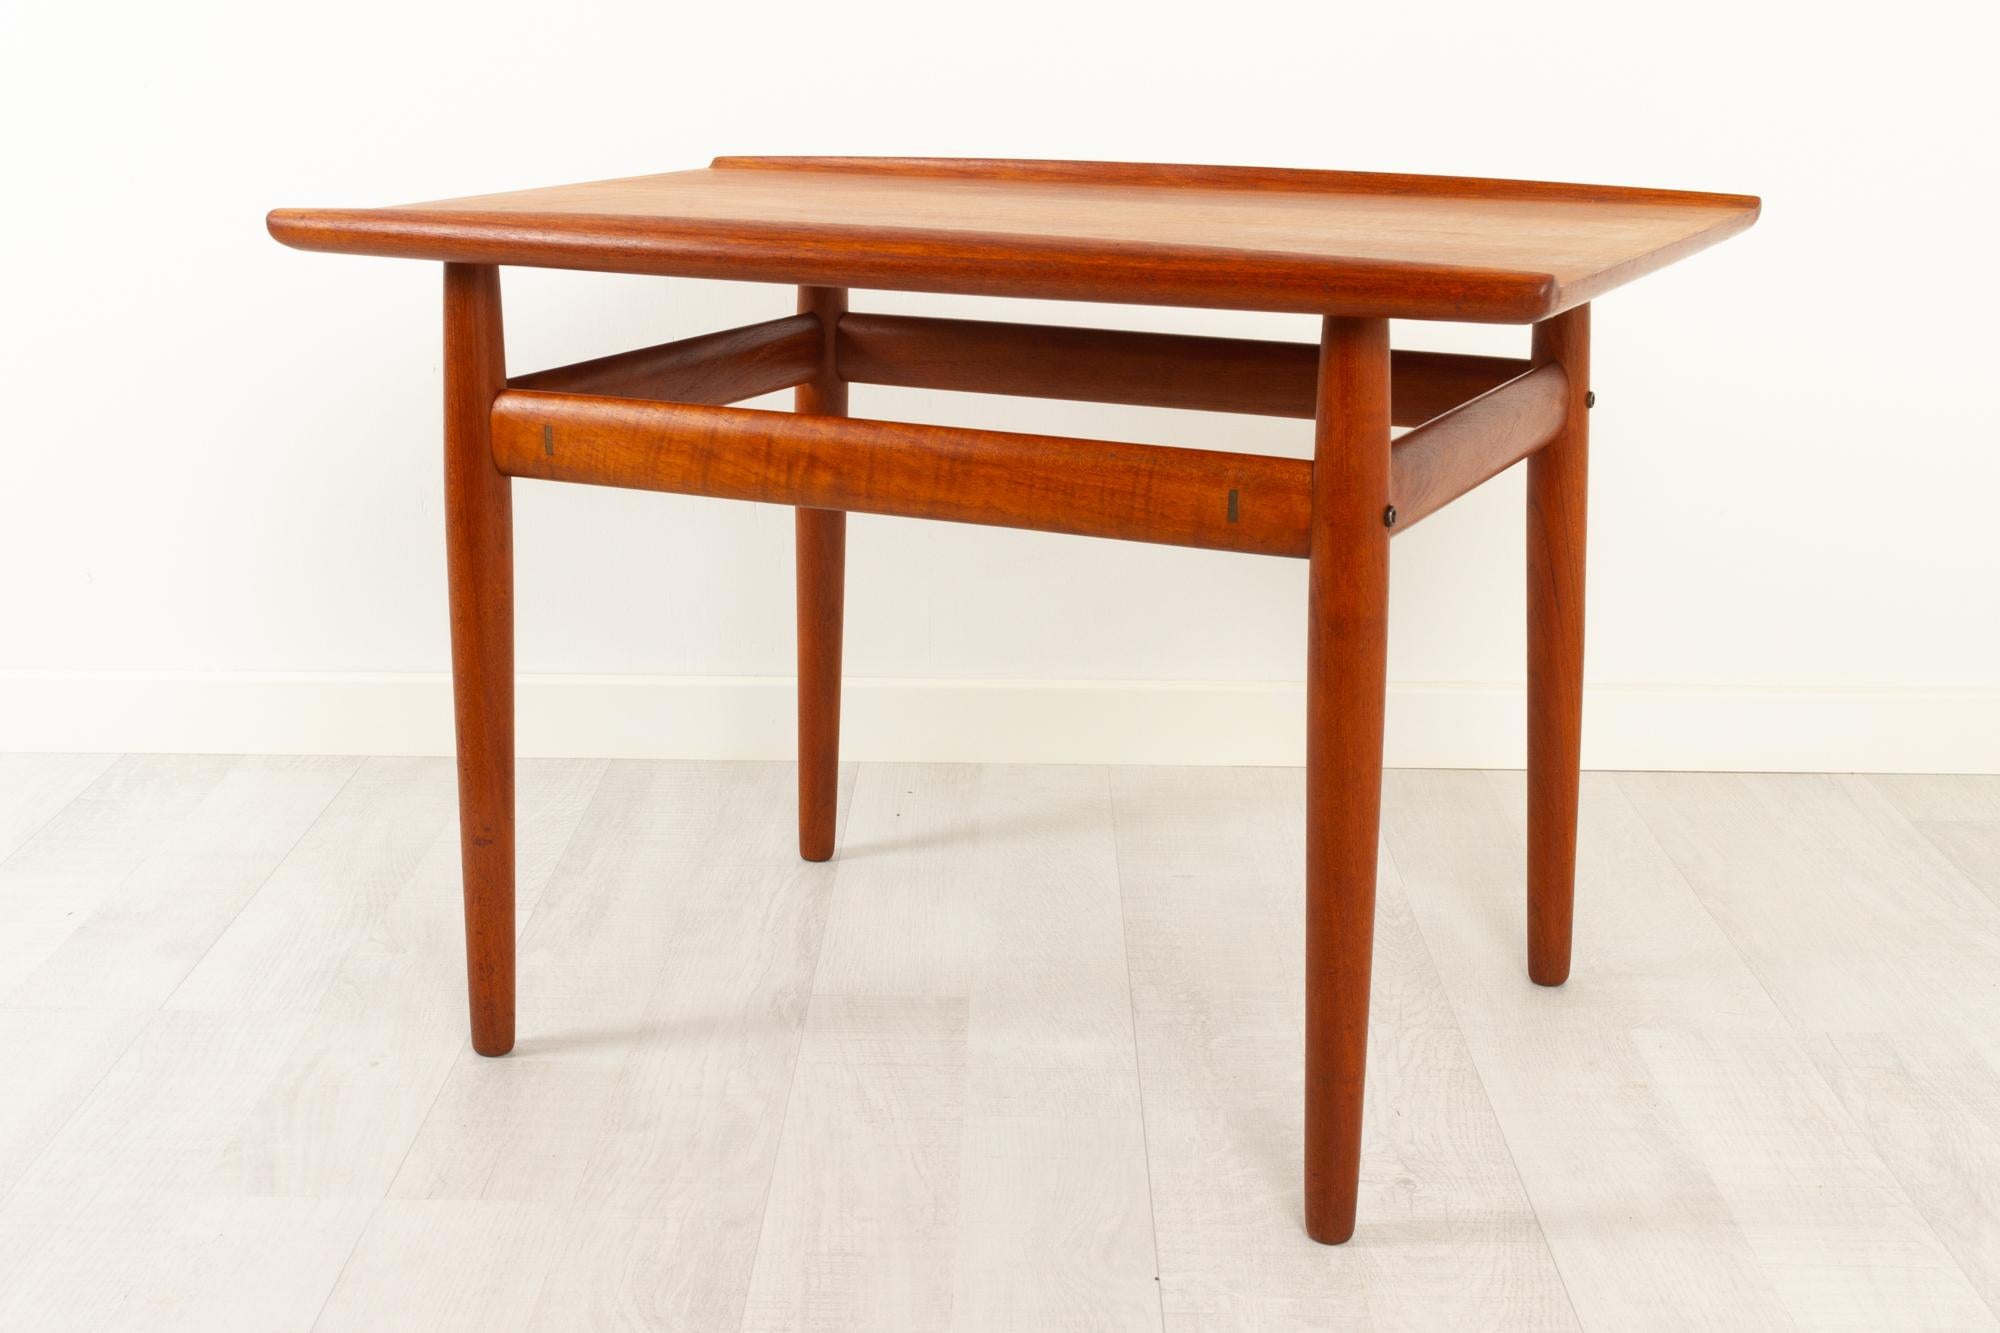 Mid-20th Century Vintage Danish Teak Side Table by Grete Jalk for Glostrup Møbelfabrik, 1960s For Sale